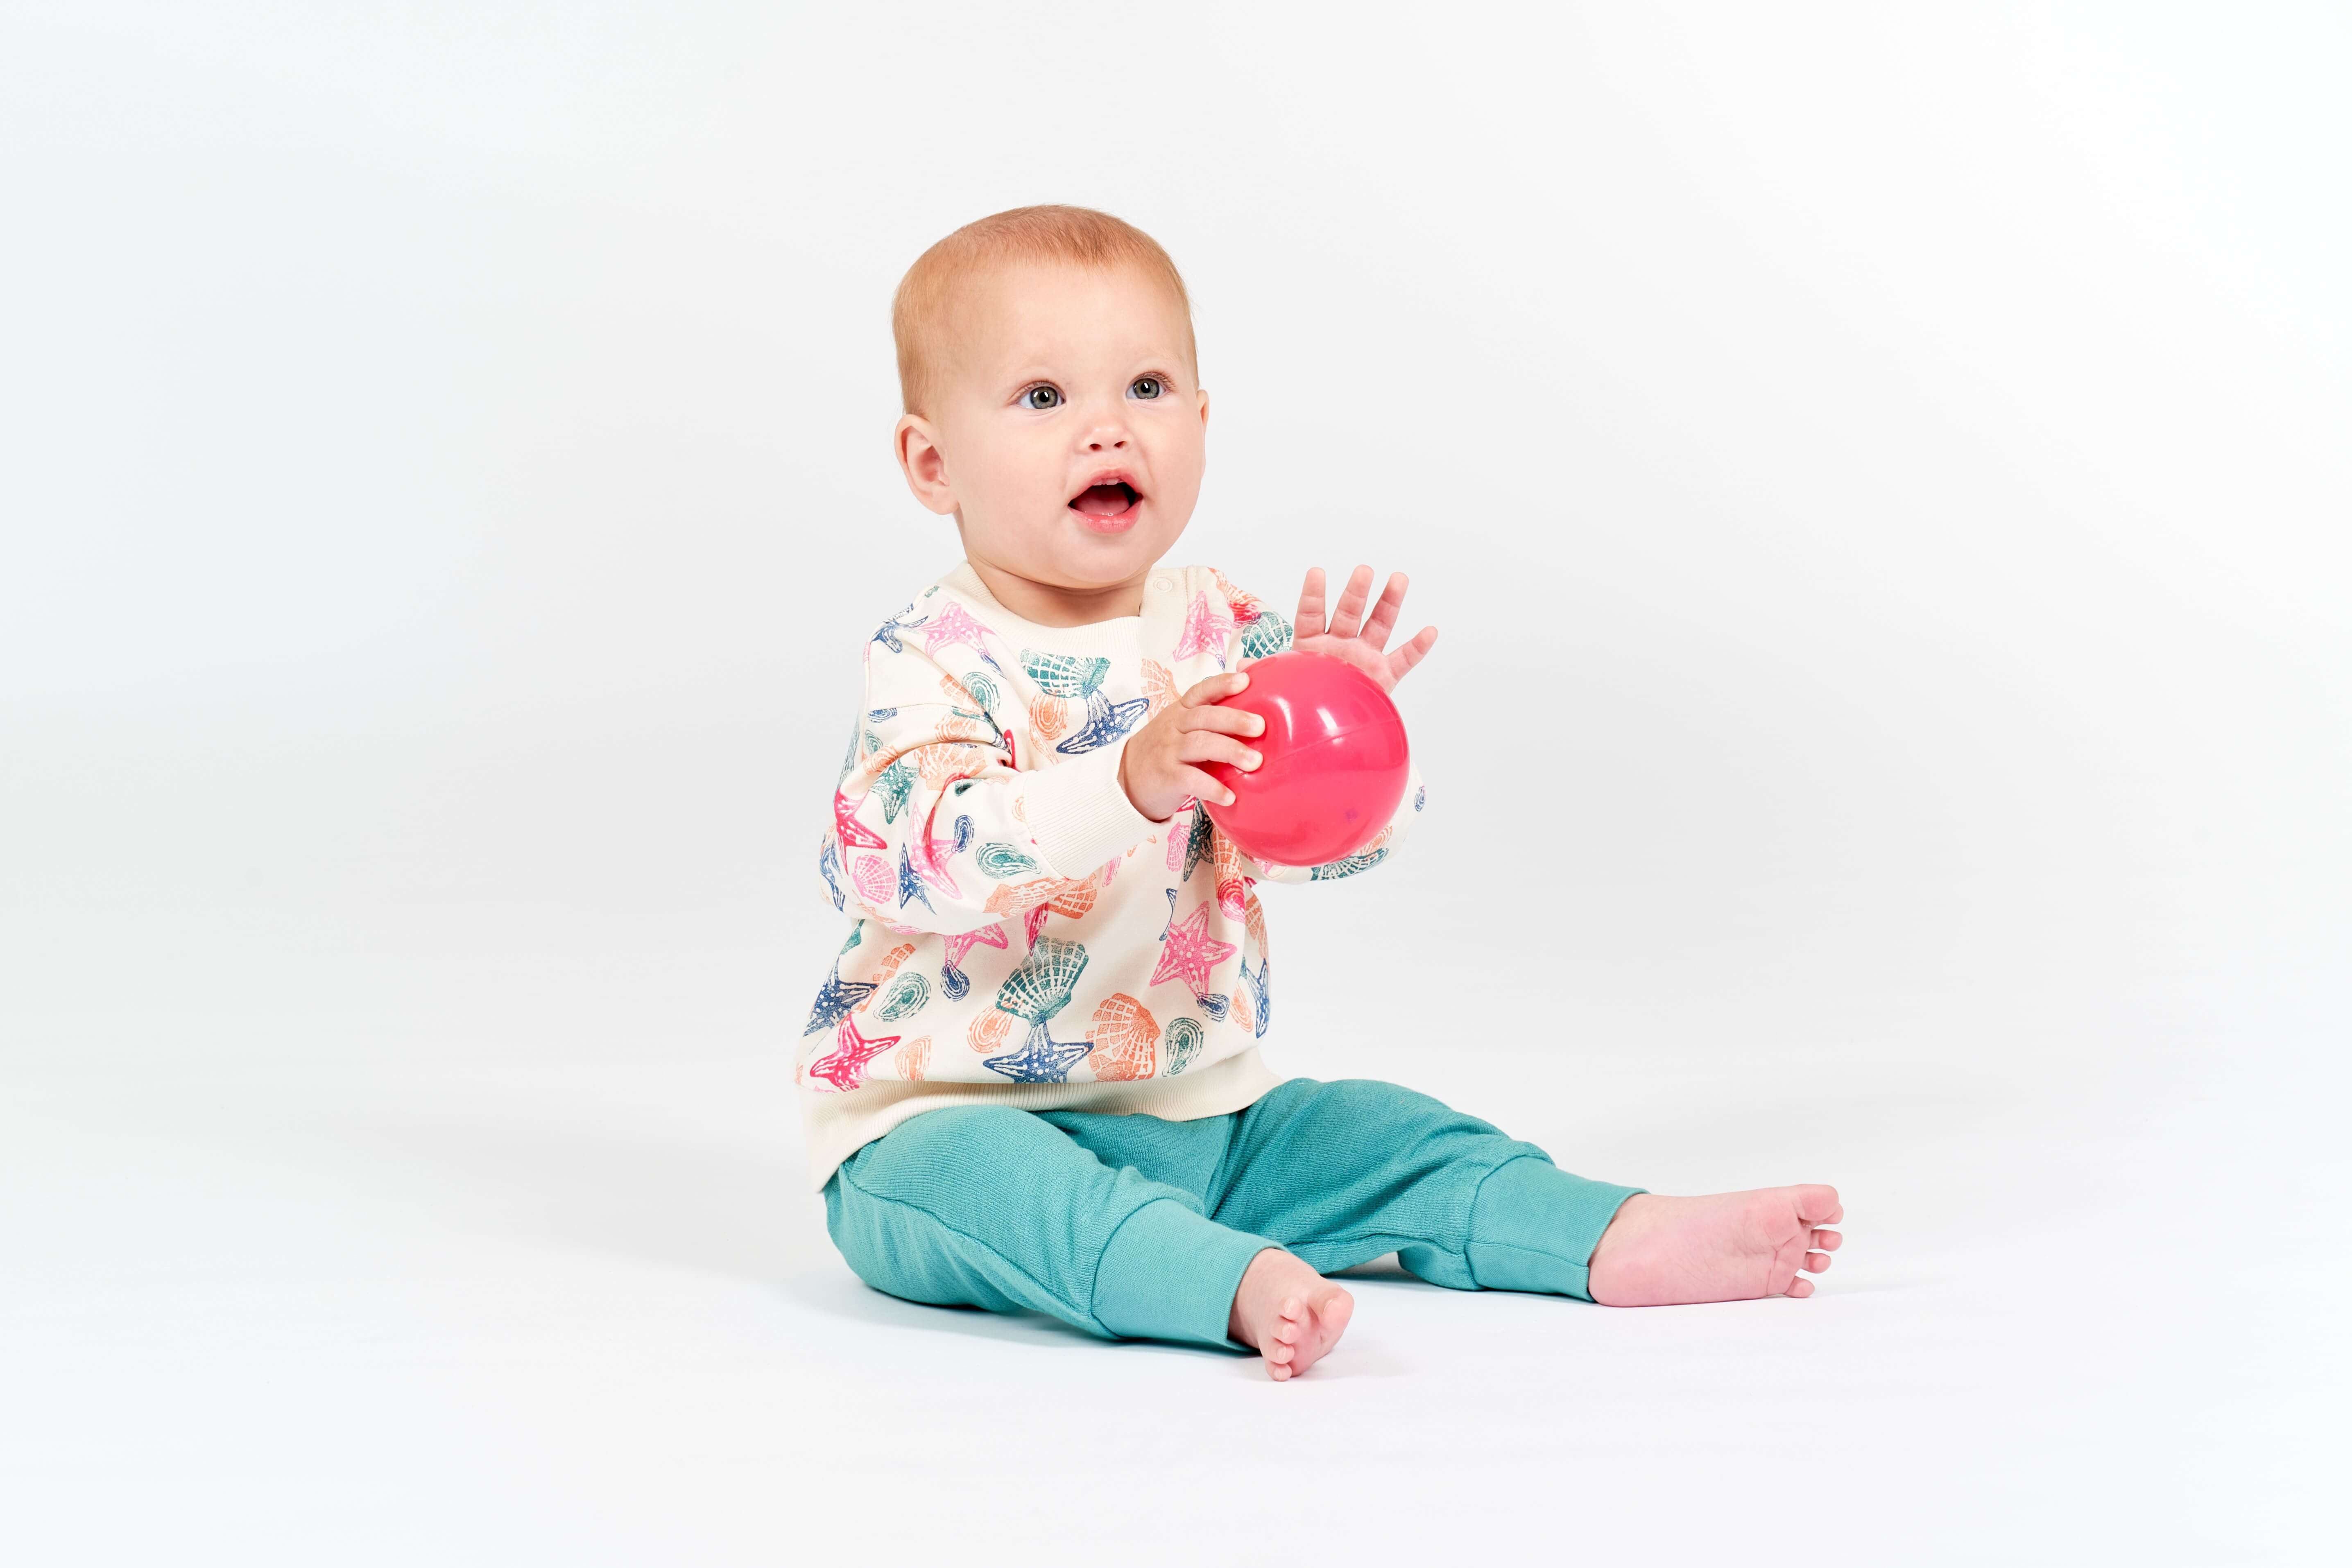 Baby mit coolem Outfit hält Ball in der Hand